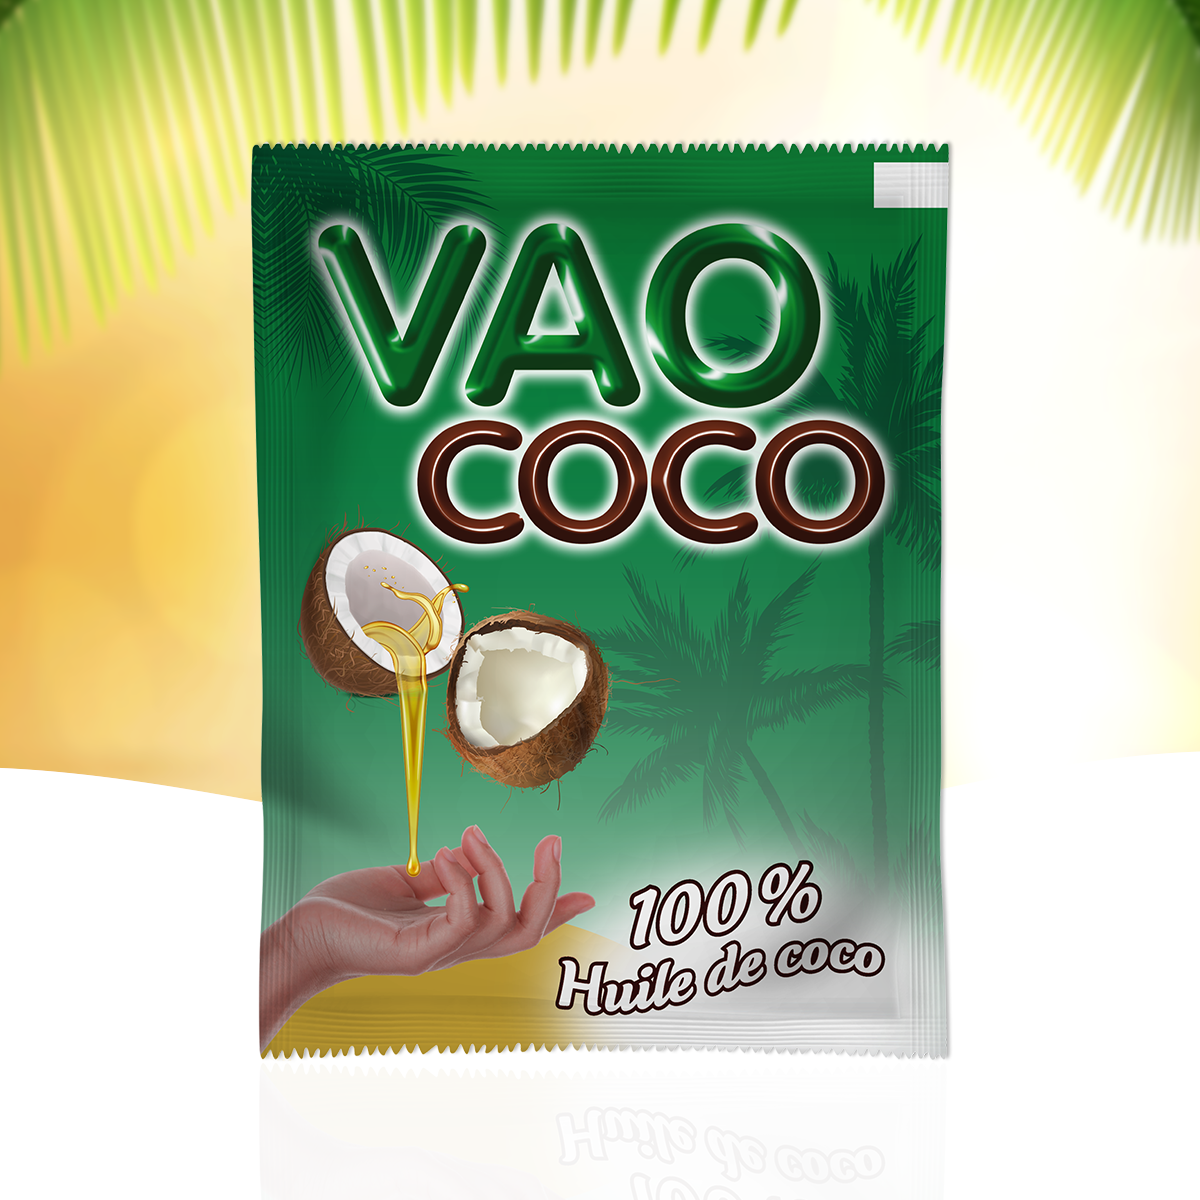 VAO COCO NATURE HUILE DE COCO